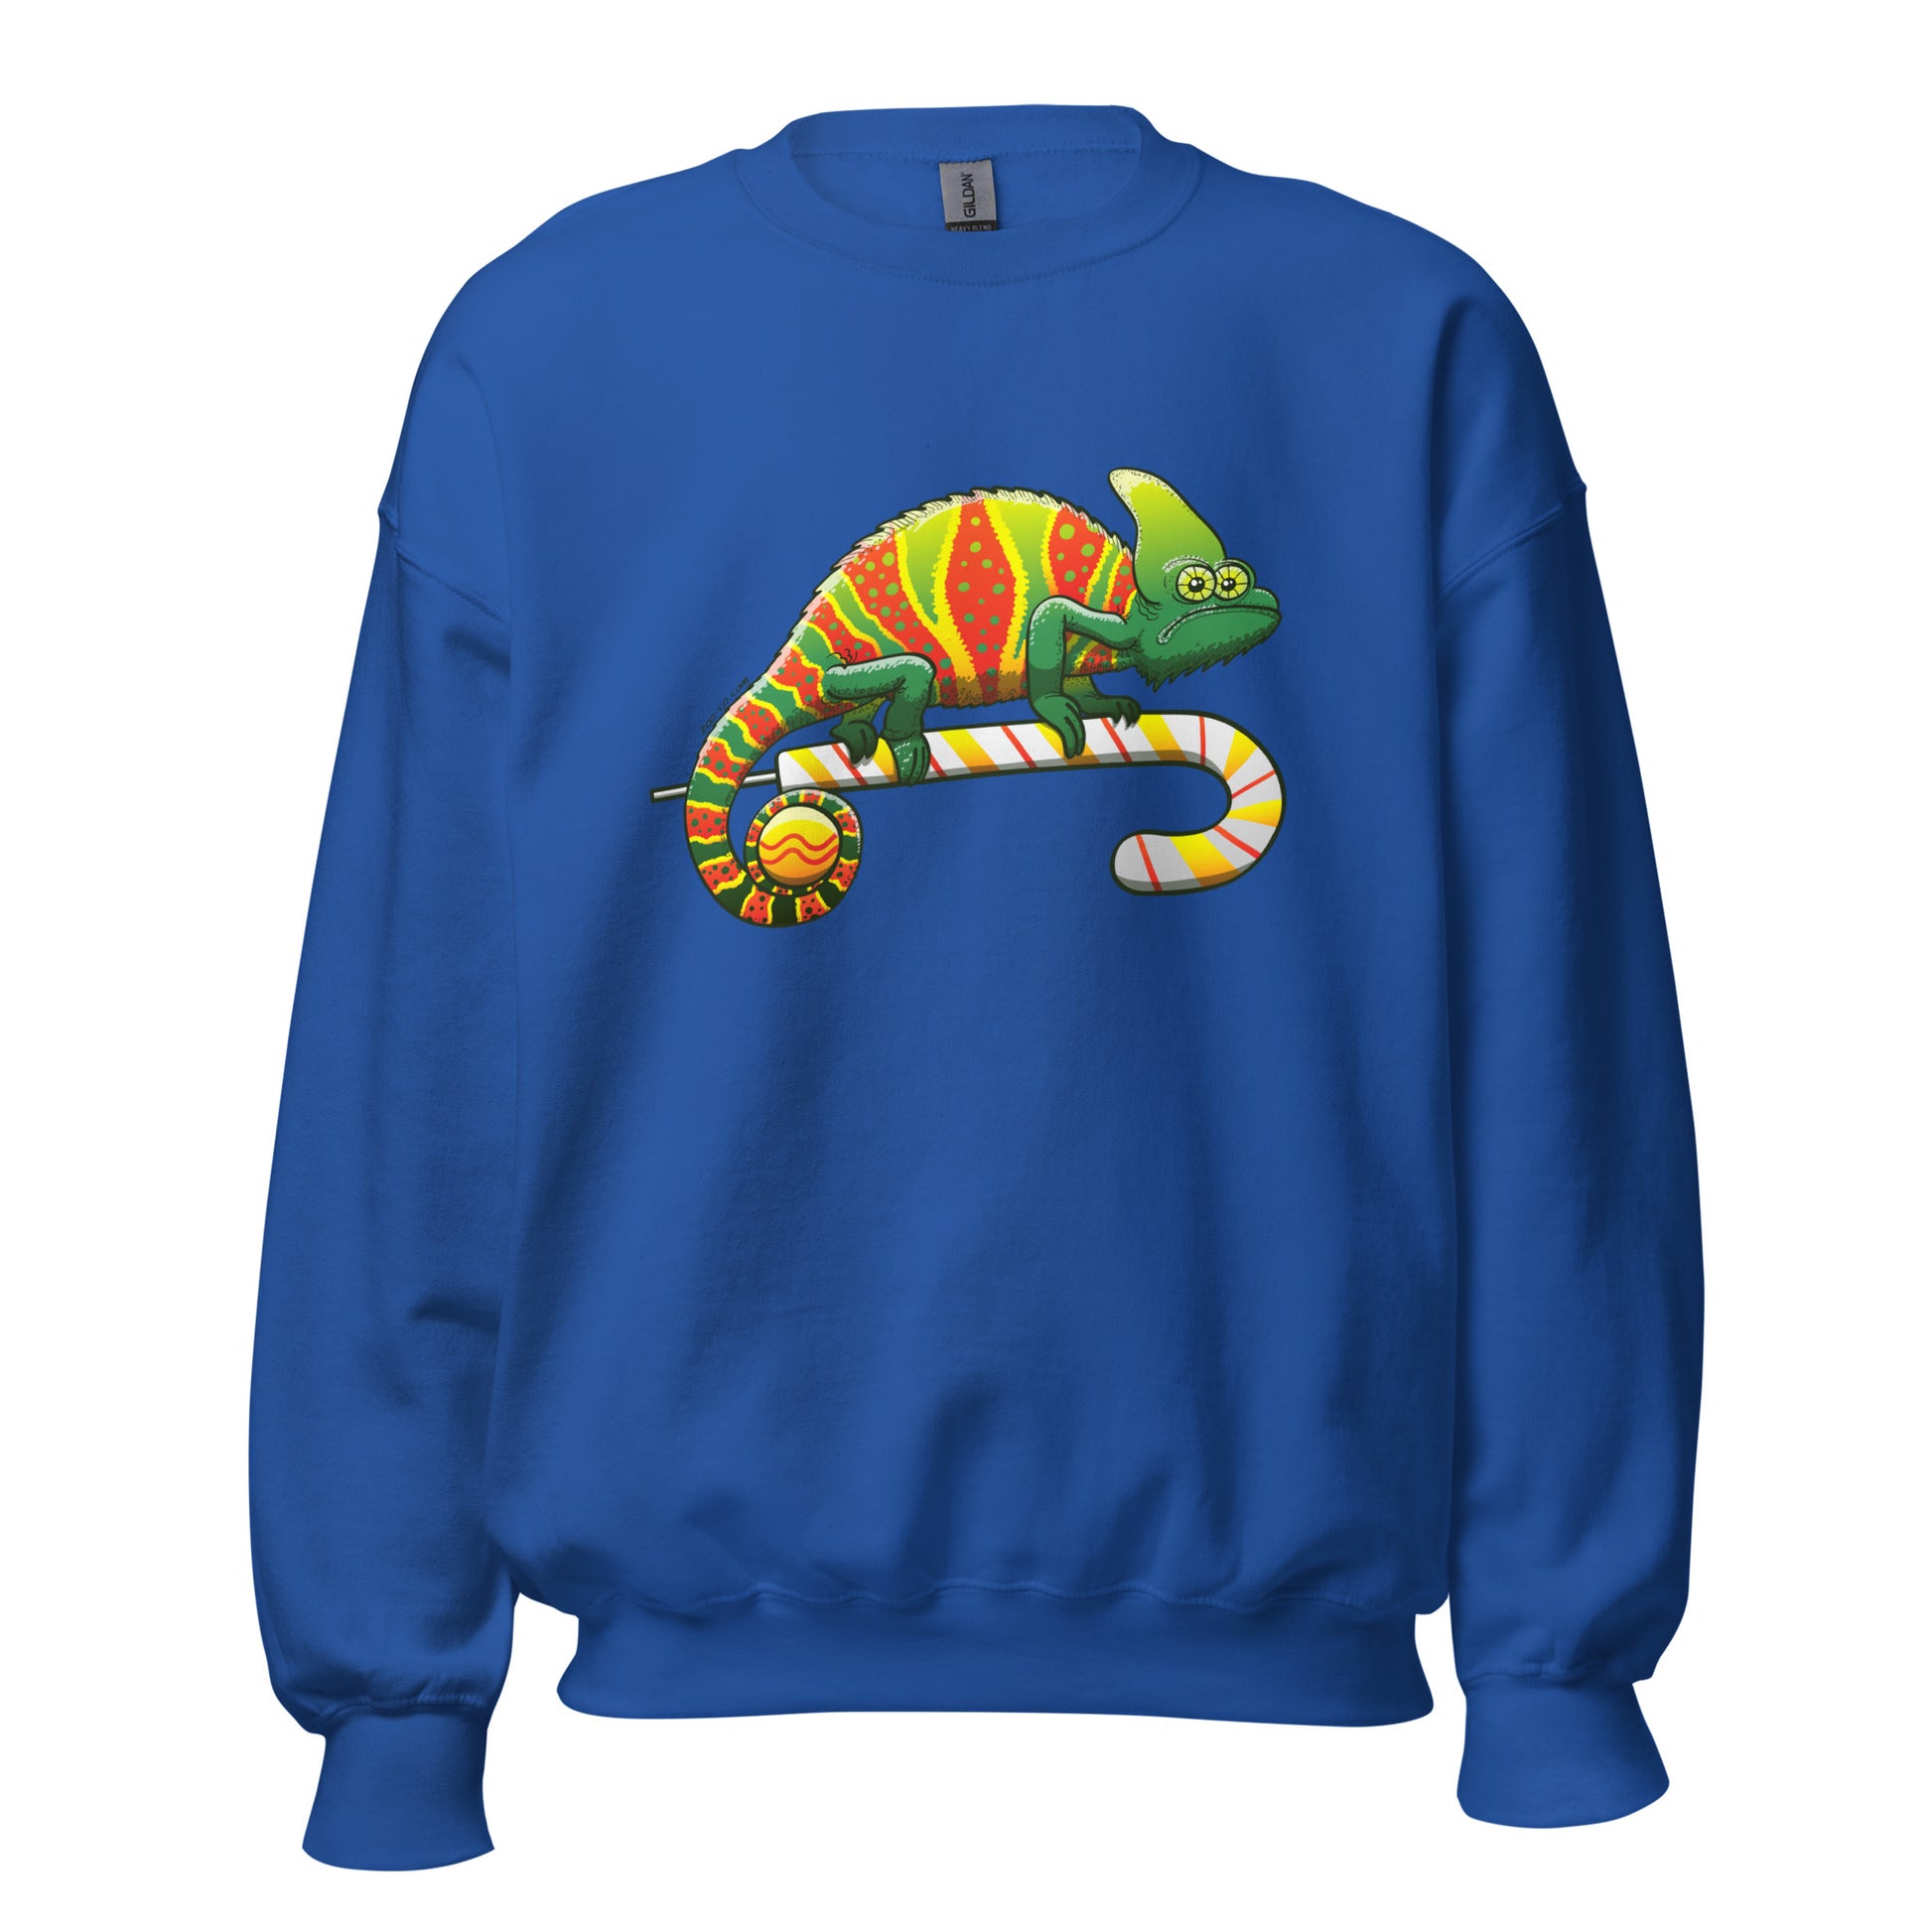 Christmas chameleon ready for the big season - Unisex Sweatshirt. Royal blue. Front view